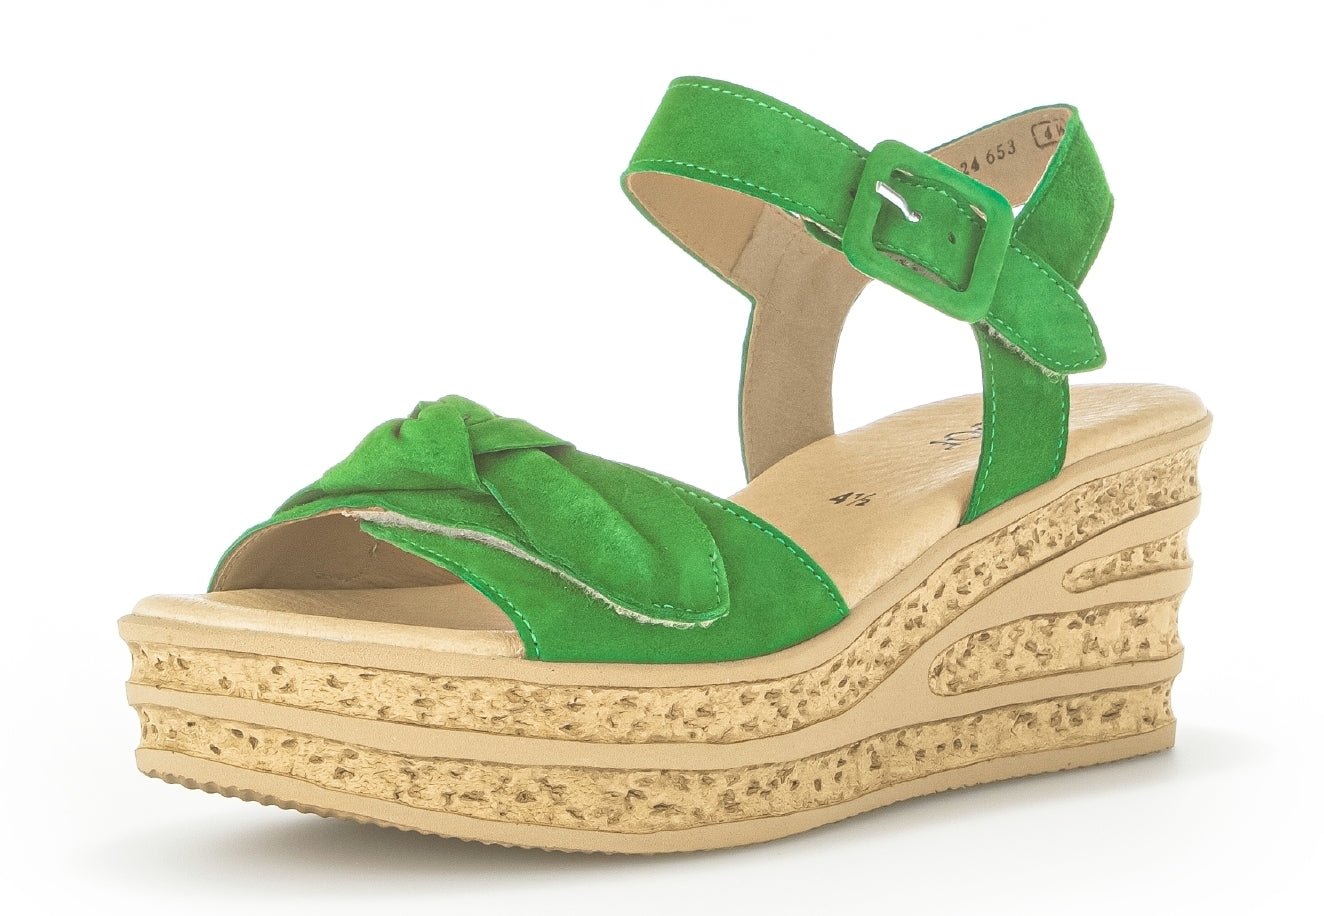 '44.653.19' women's sandal - Green - Chaplinshoes'44.653.19' women's sandal - GreenGabor